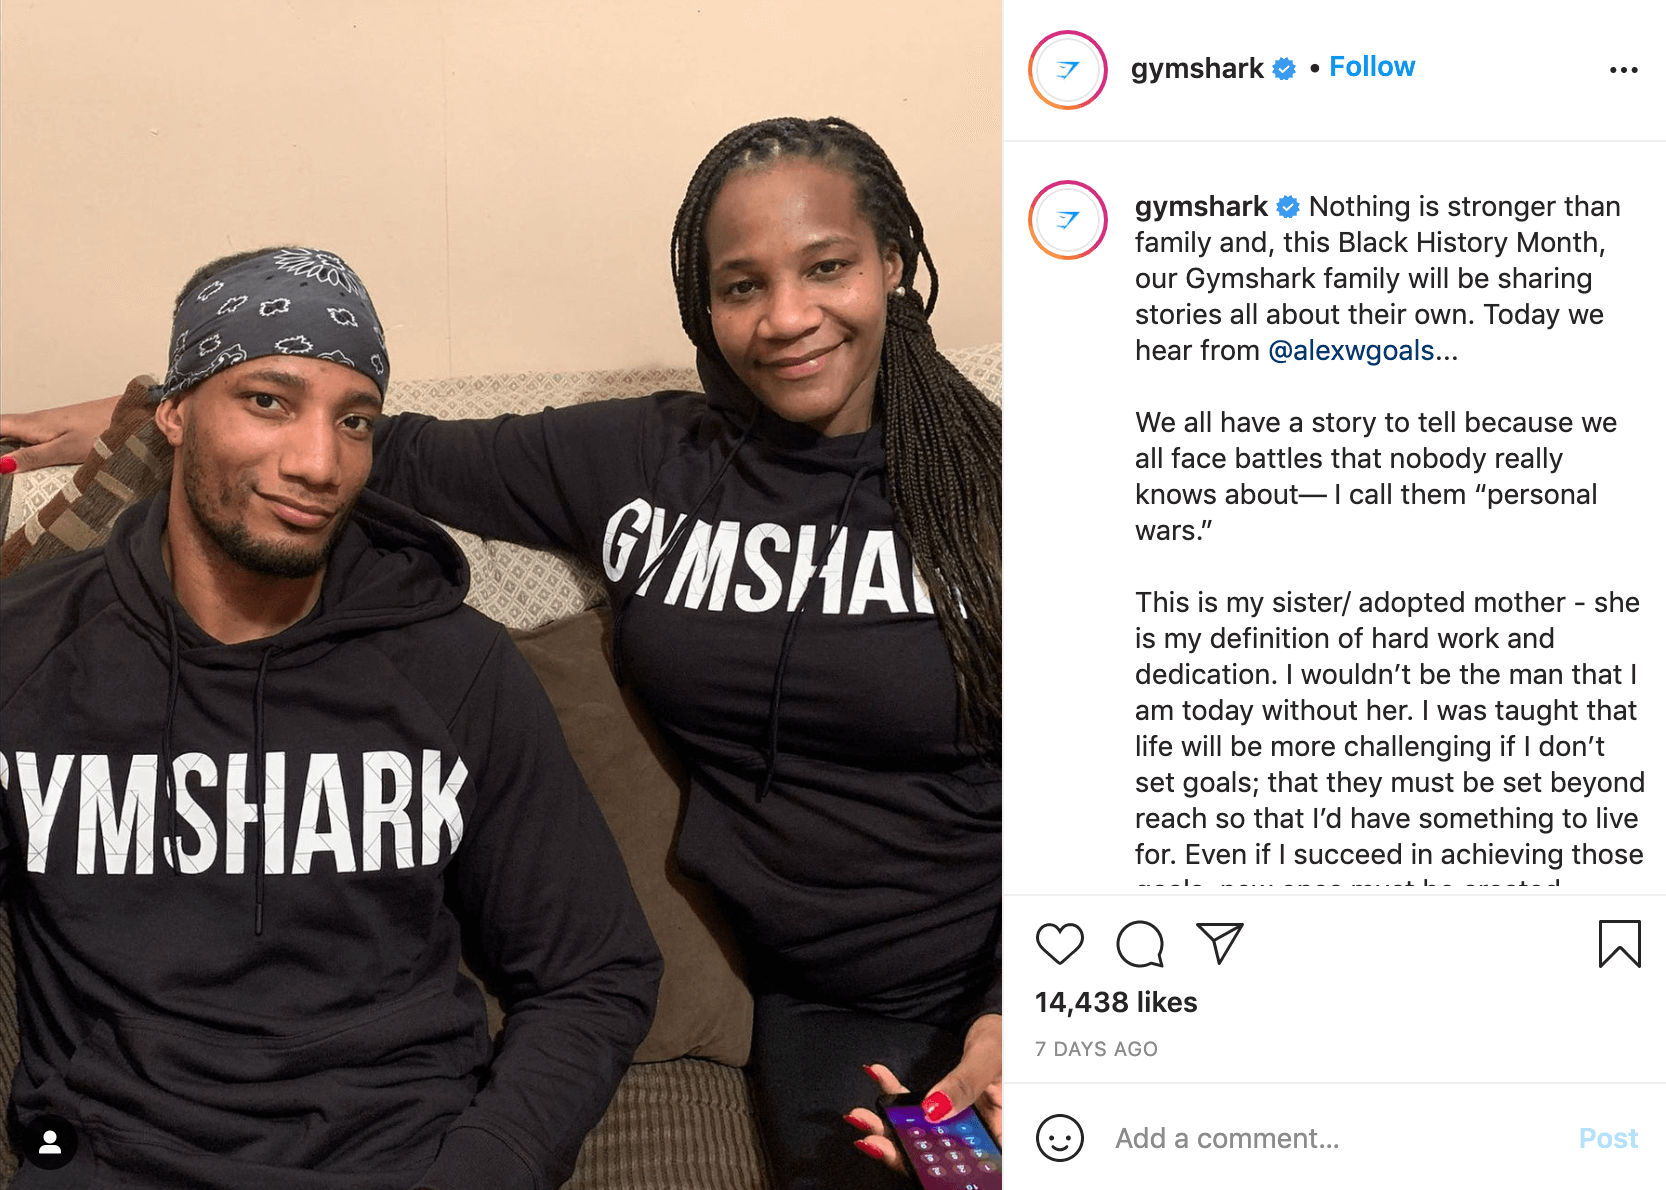 Gymshark Instagram post - employee story